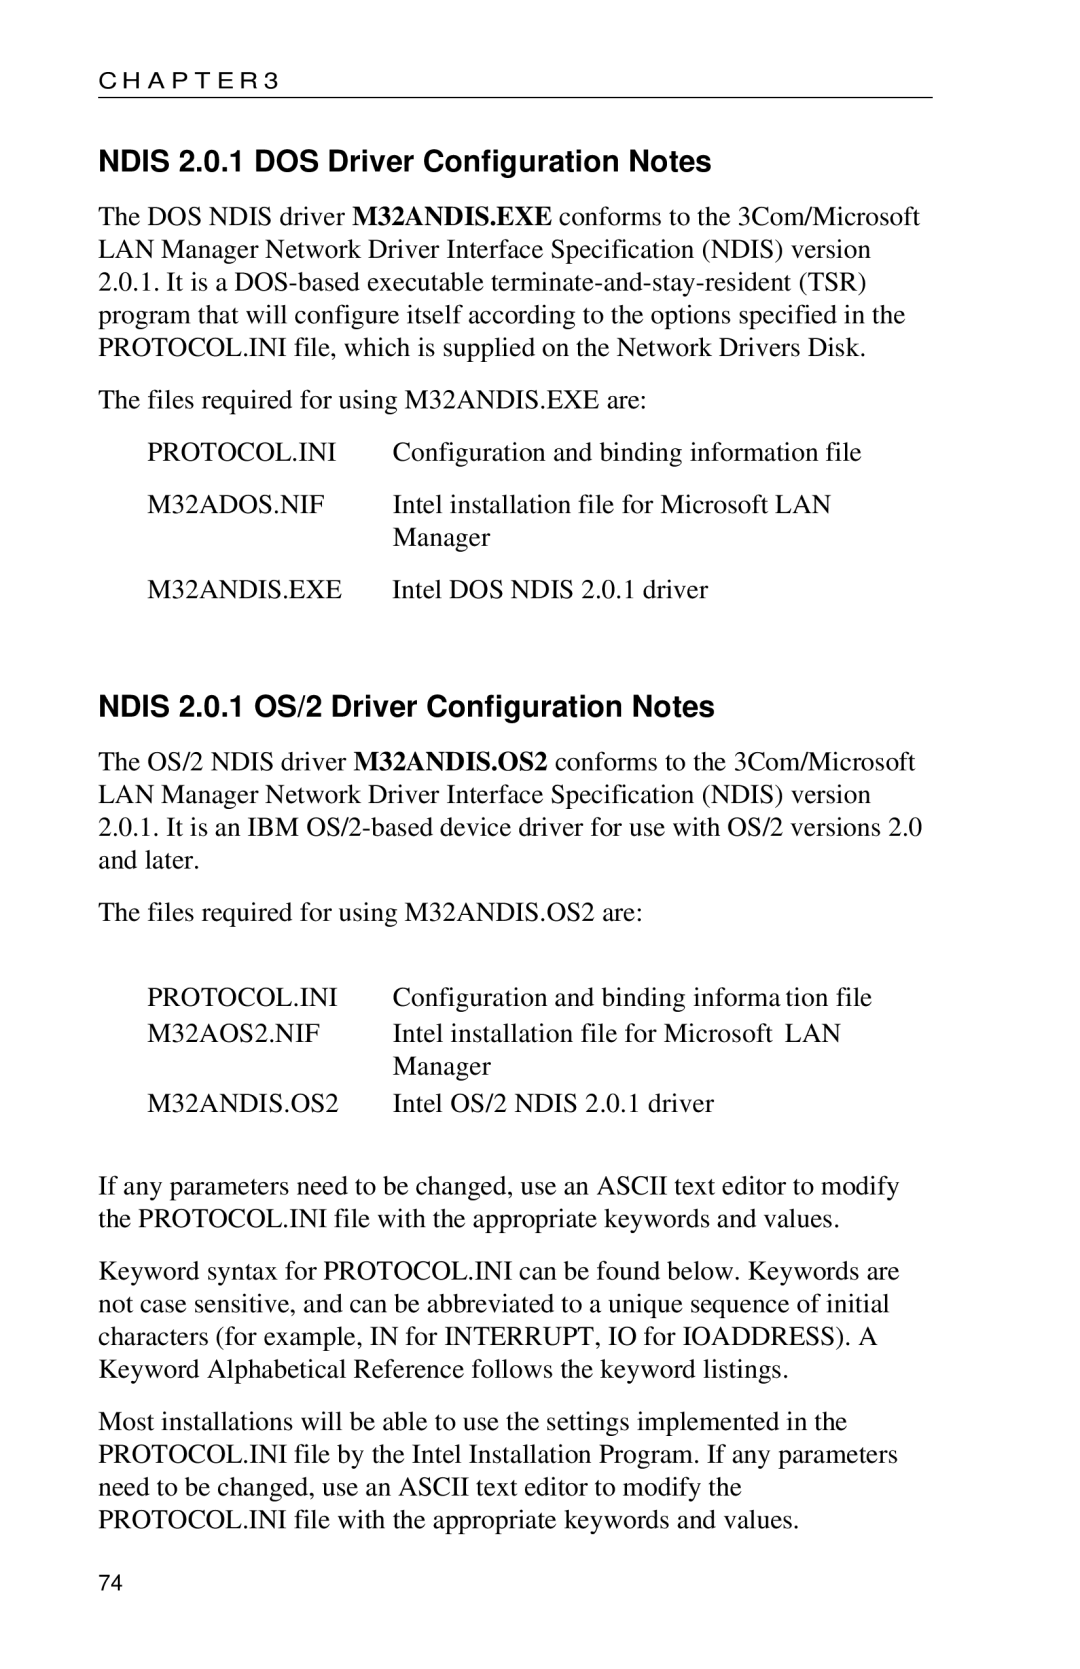 Intel PRO appendix Ndis 2.0.1 DOS Driver Configuration Notes, Ndis 2.0.1 OS/2 Driver Configuration Notes 